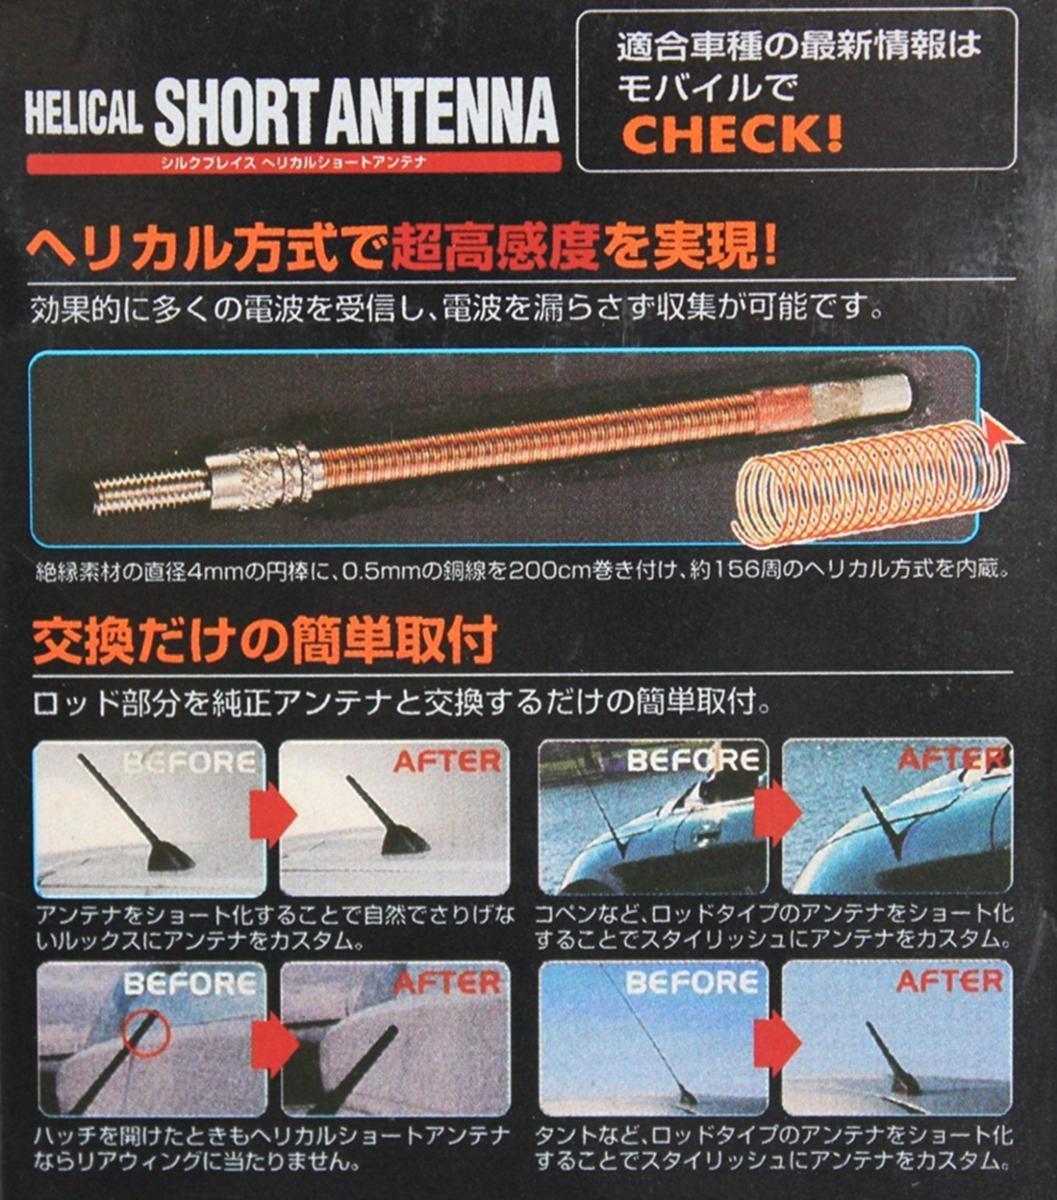  postage 300 jpy * new goods * car helical short antenna black 14.0cm rod antenna original exchange type HY01132